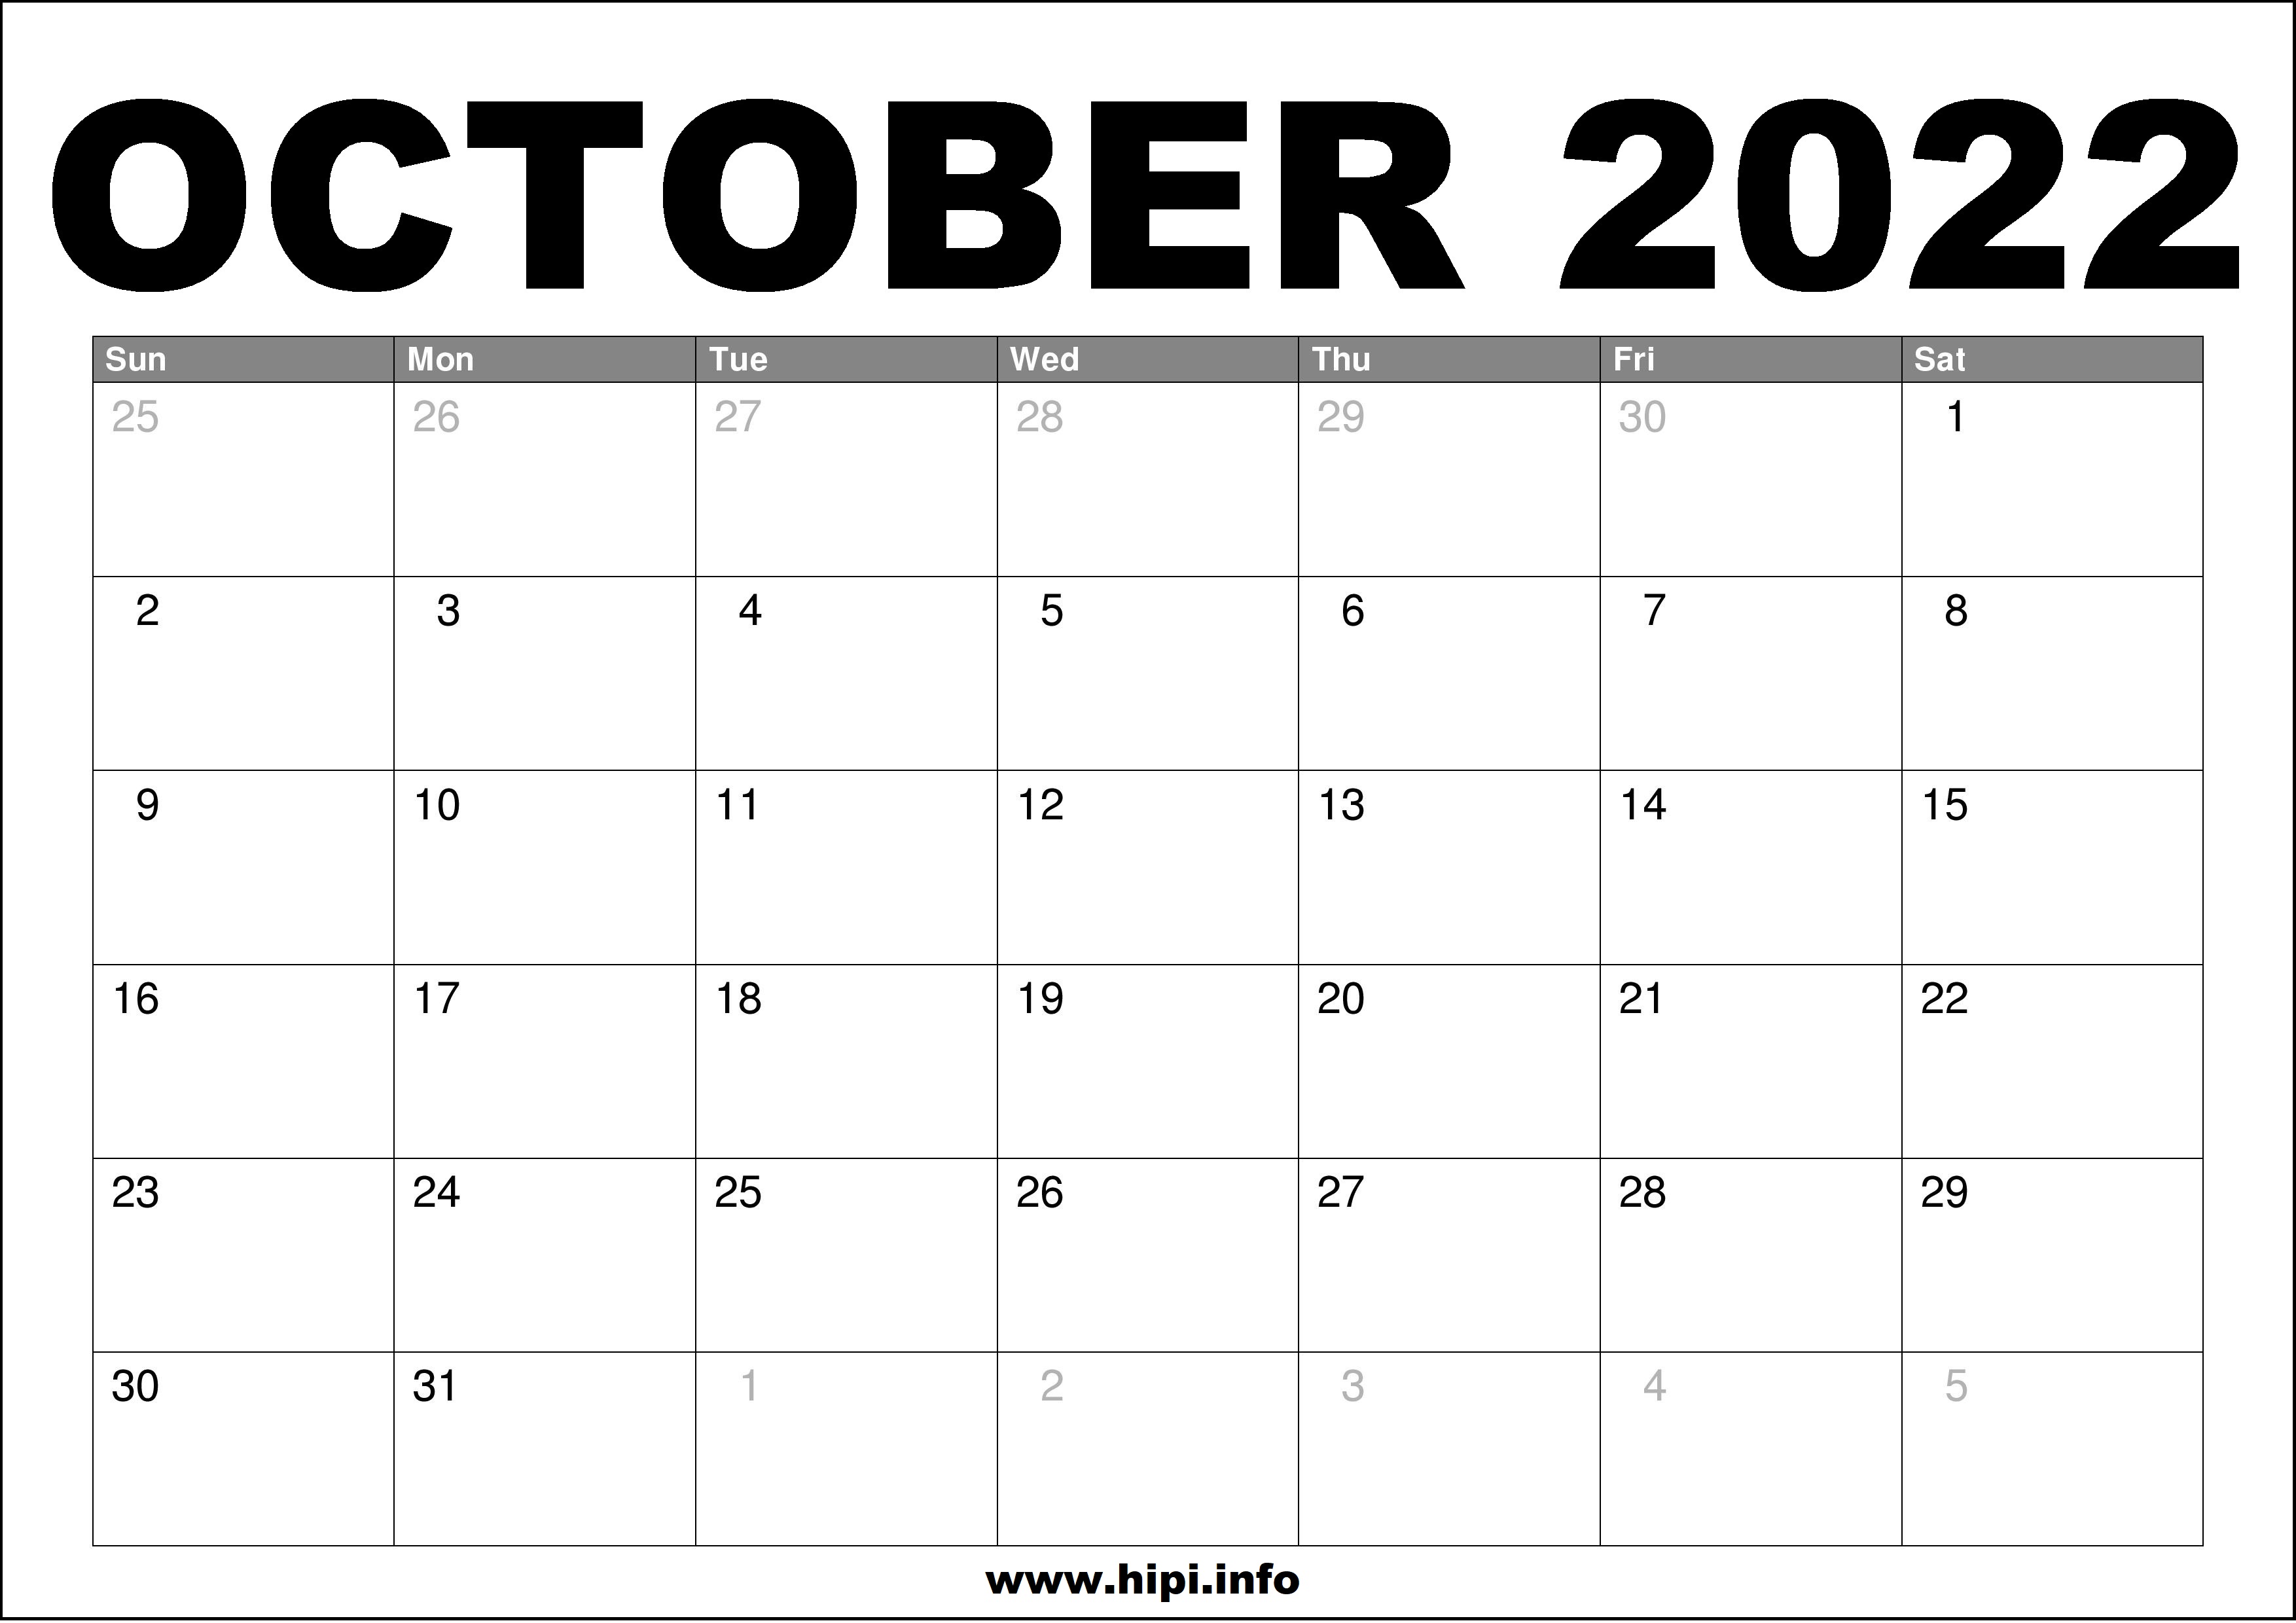 October 2022 Calendar Template Printable October 2022 Calendar Printable Free - Hipi.info | Calendars Printable Free